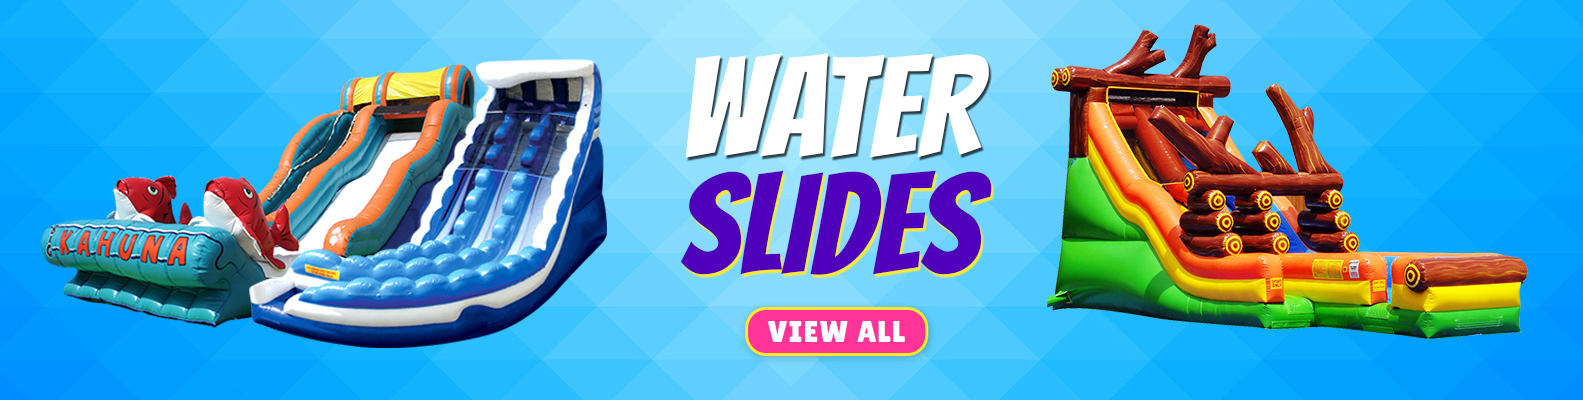 inflatable water slide rentals in Glendale